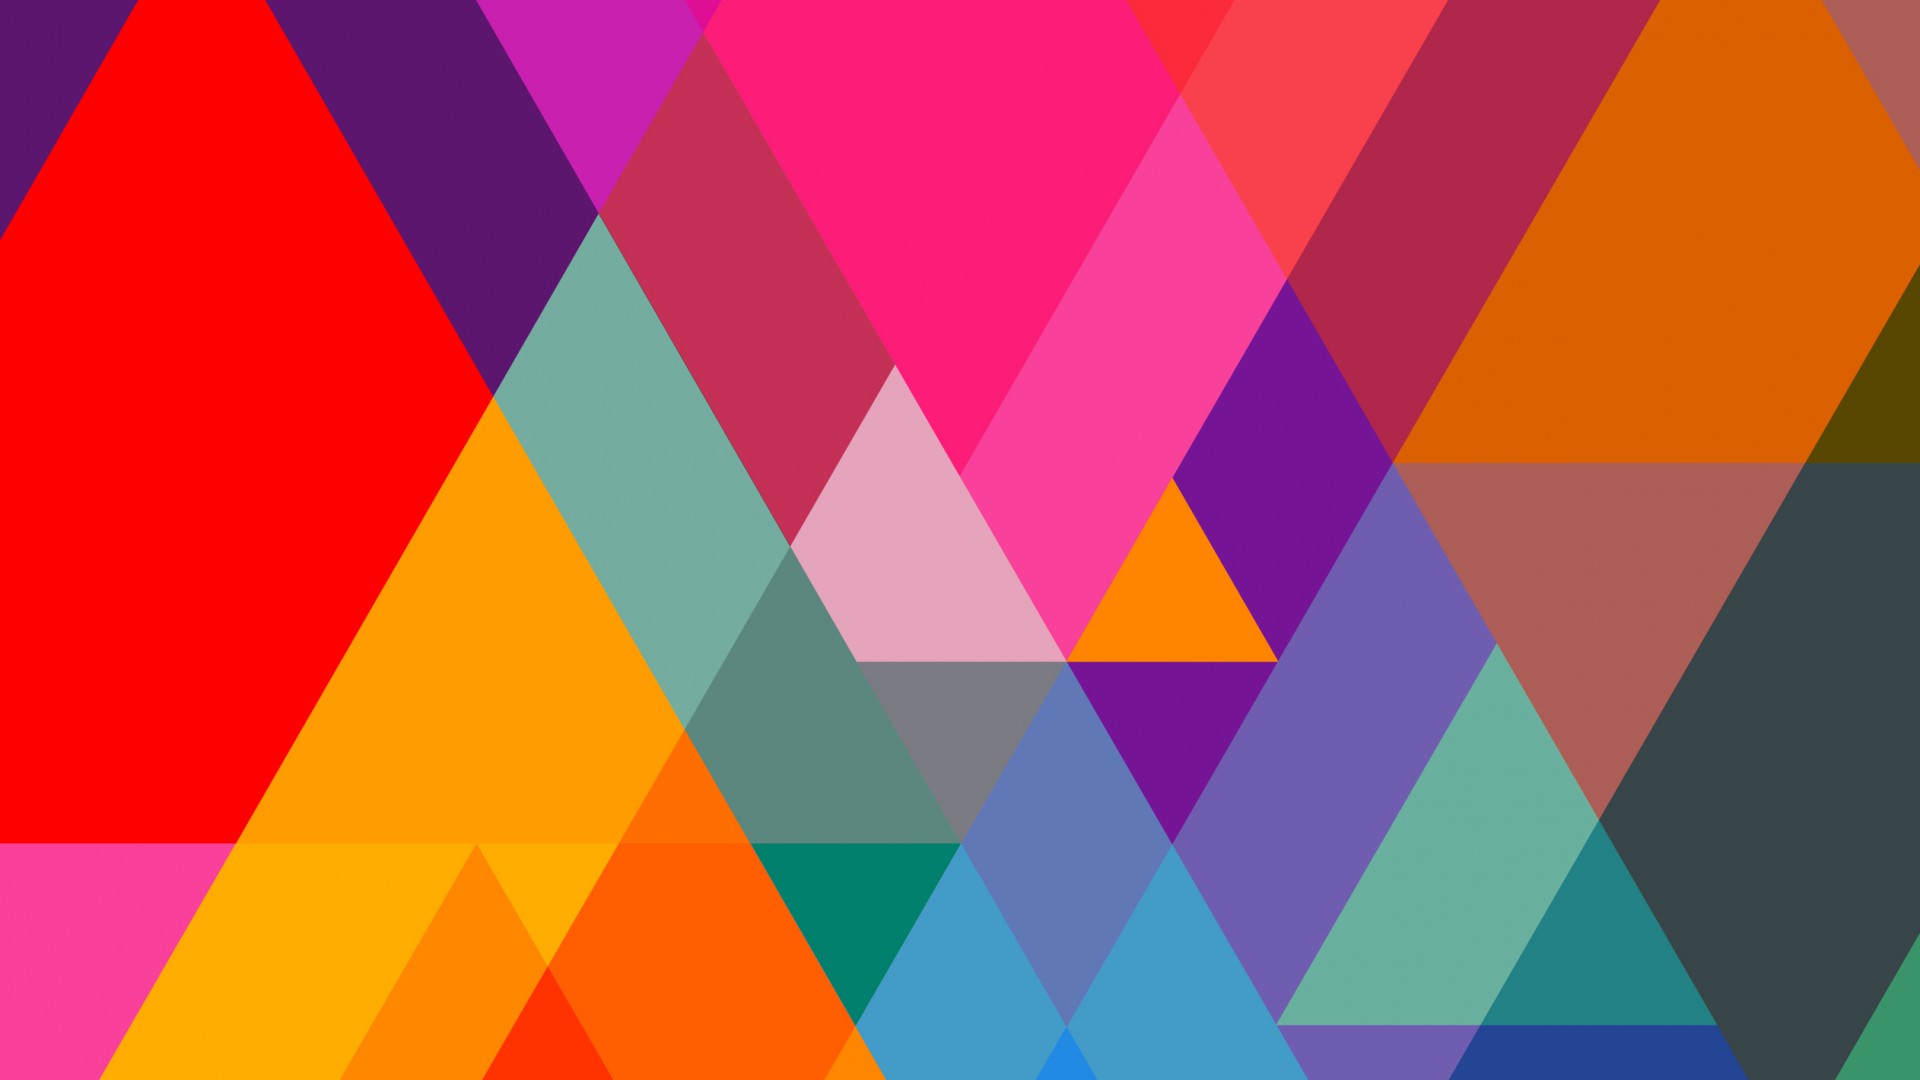 полигон, 4k, 5k, цветной, андроид, фон, polygon, 4k, 5k wallpaper, iphone wallpaper, triangle, background, orange, red, blue, pattern (horizontal)